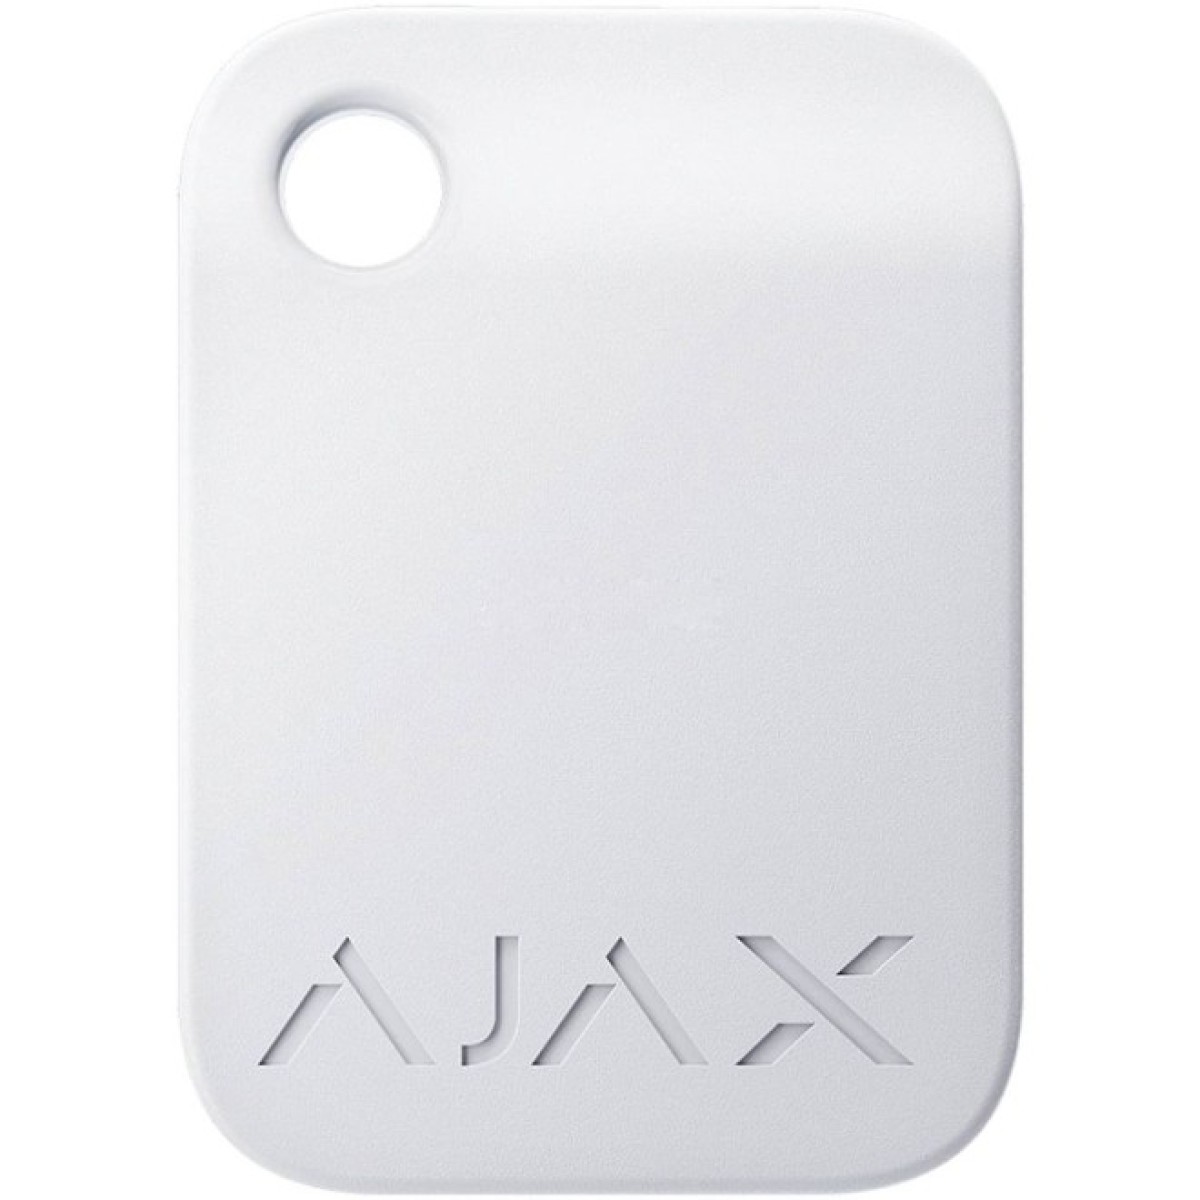 Брелок для охранной системы Ajax Tag White /3 256_256.jpg